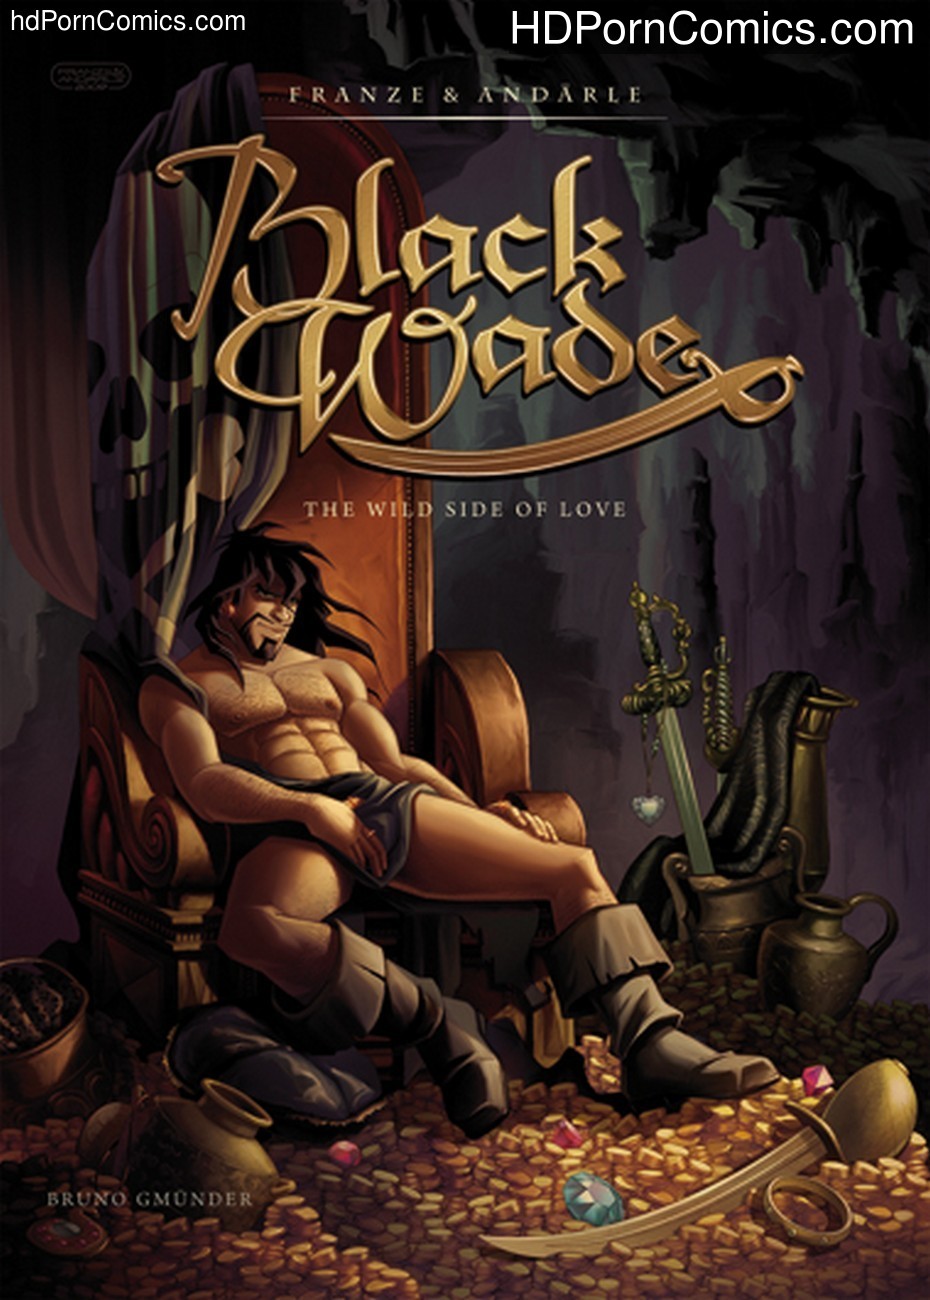 Black Porn Sex Comics - Black Wade - The Wild Side Of Love Sex Comic - HD Porn Comics